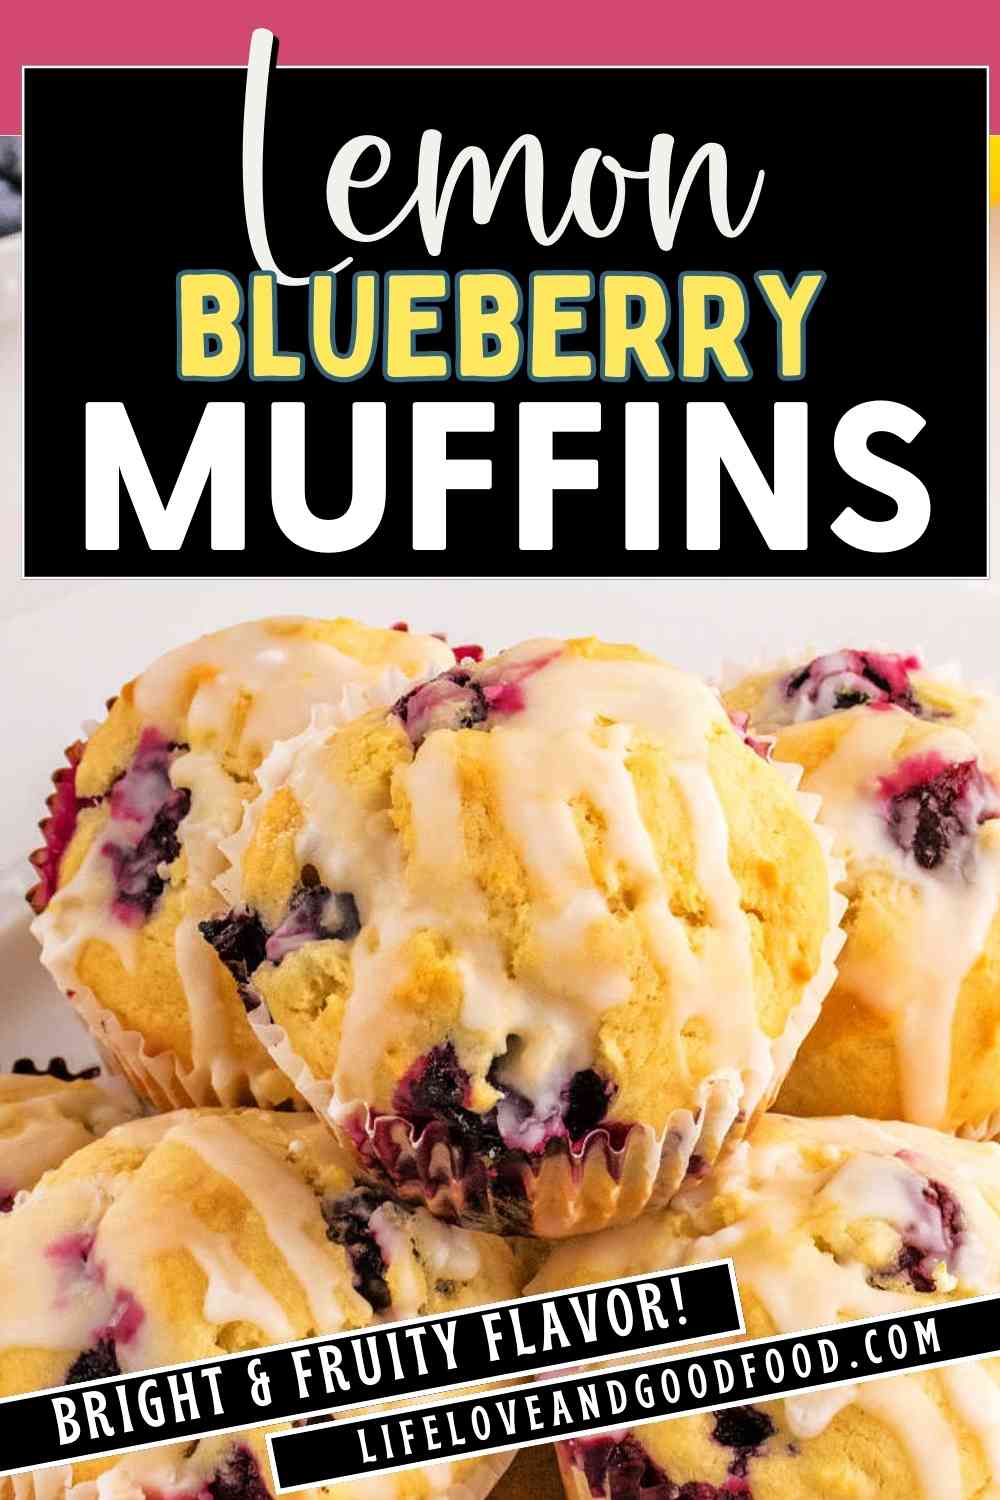 Glazed Lemon Blueberry Muffins Recipe - Life, Love, and Good Food